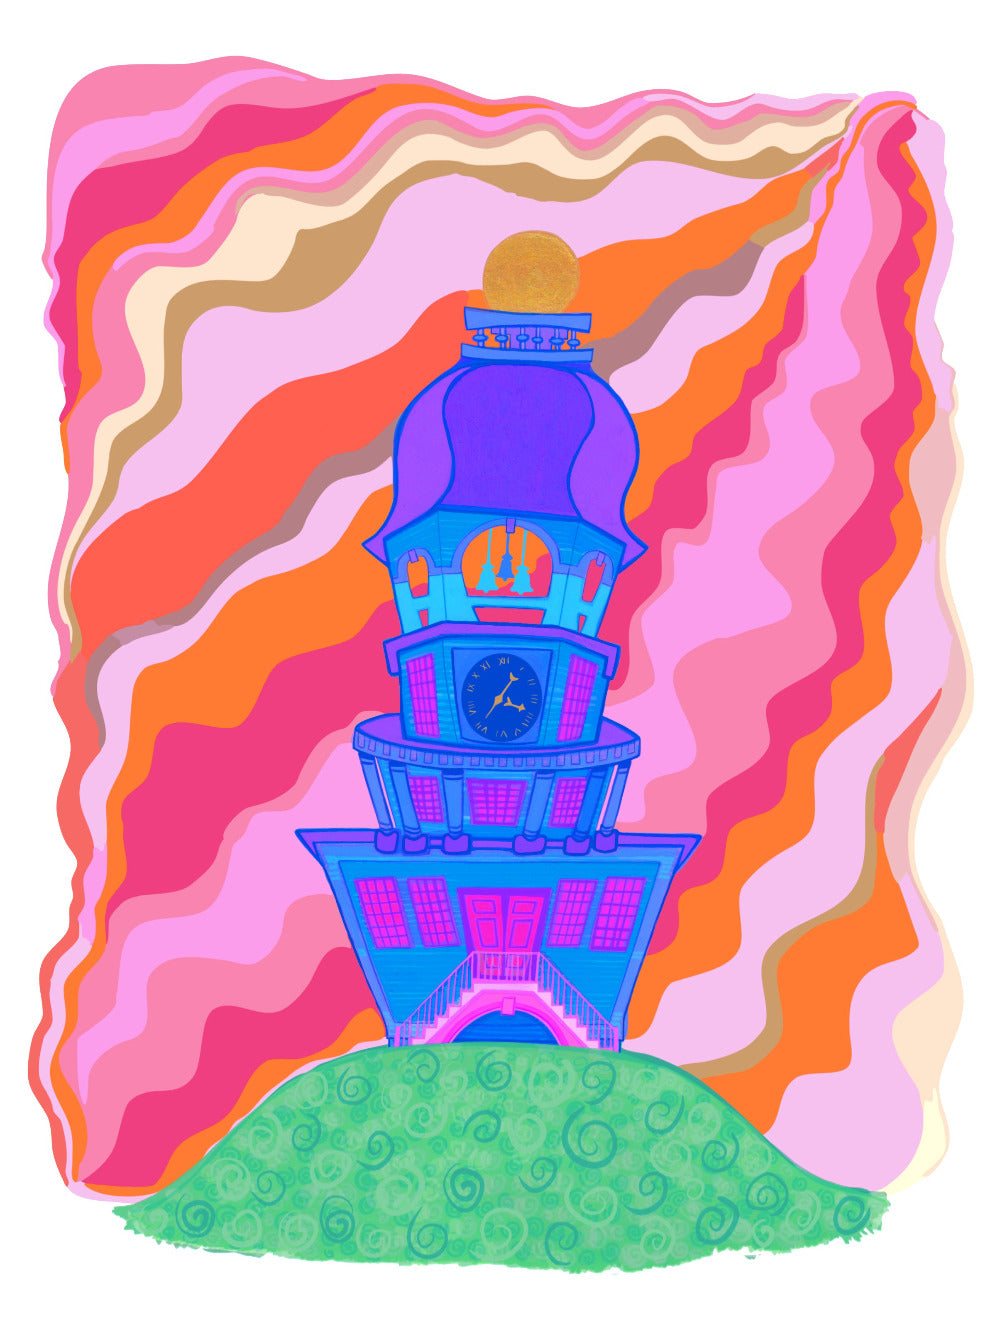 Halifax clock tower colourful